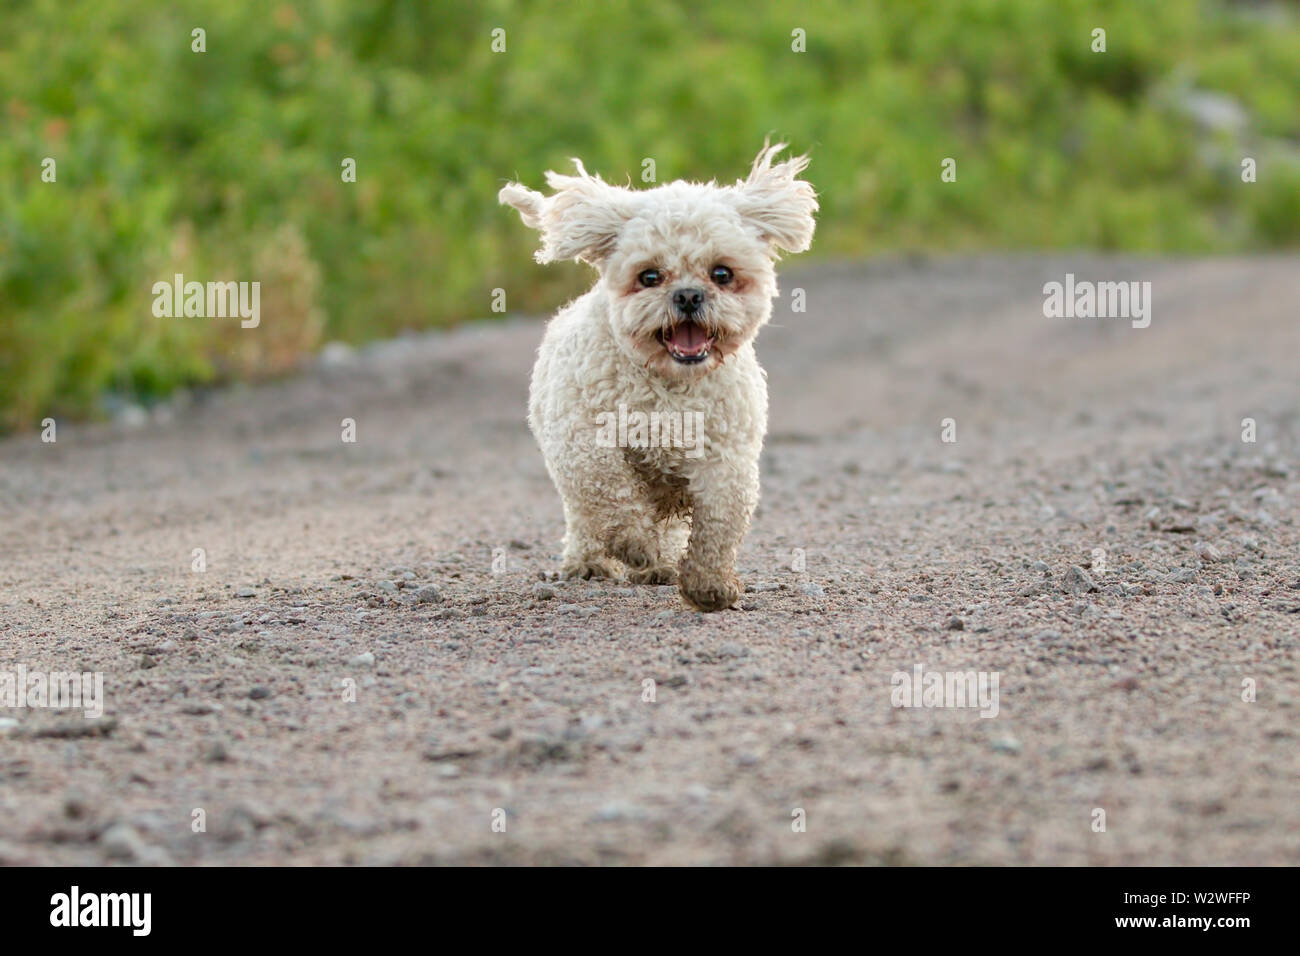 Bichon Frise Shih Tzu Mix Running Outside in Summer Stock Photo - Alamy